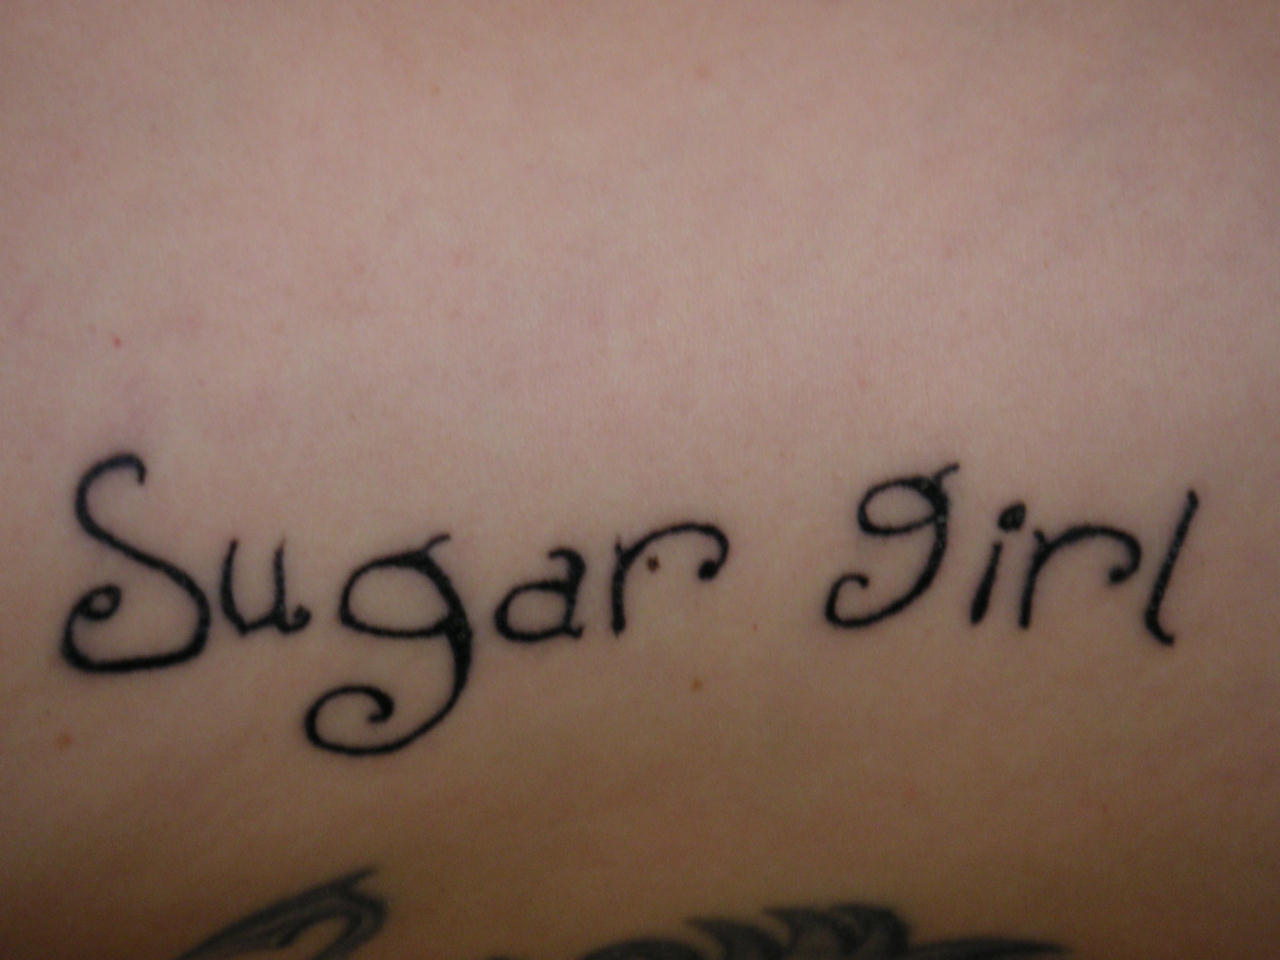 SugarGirl.jpg